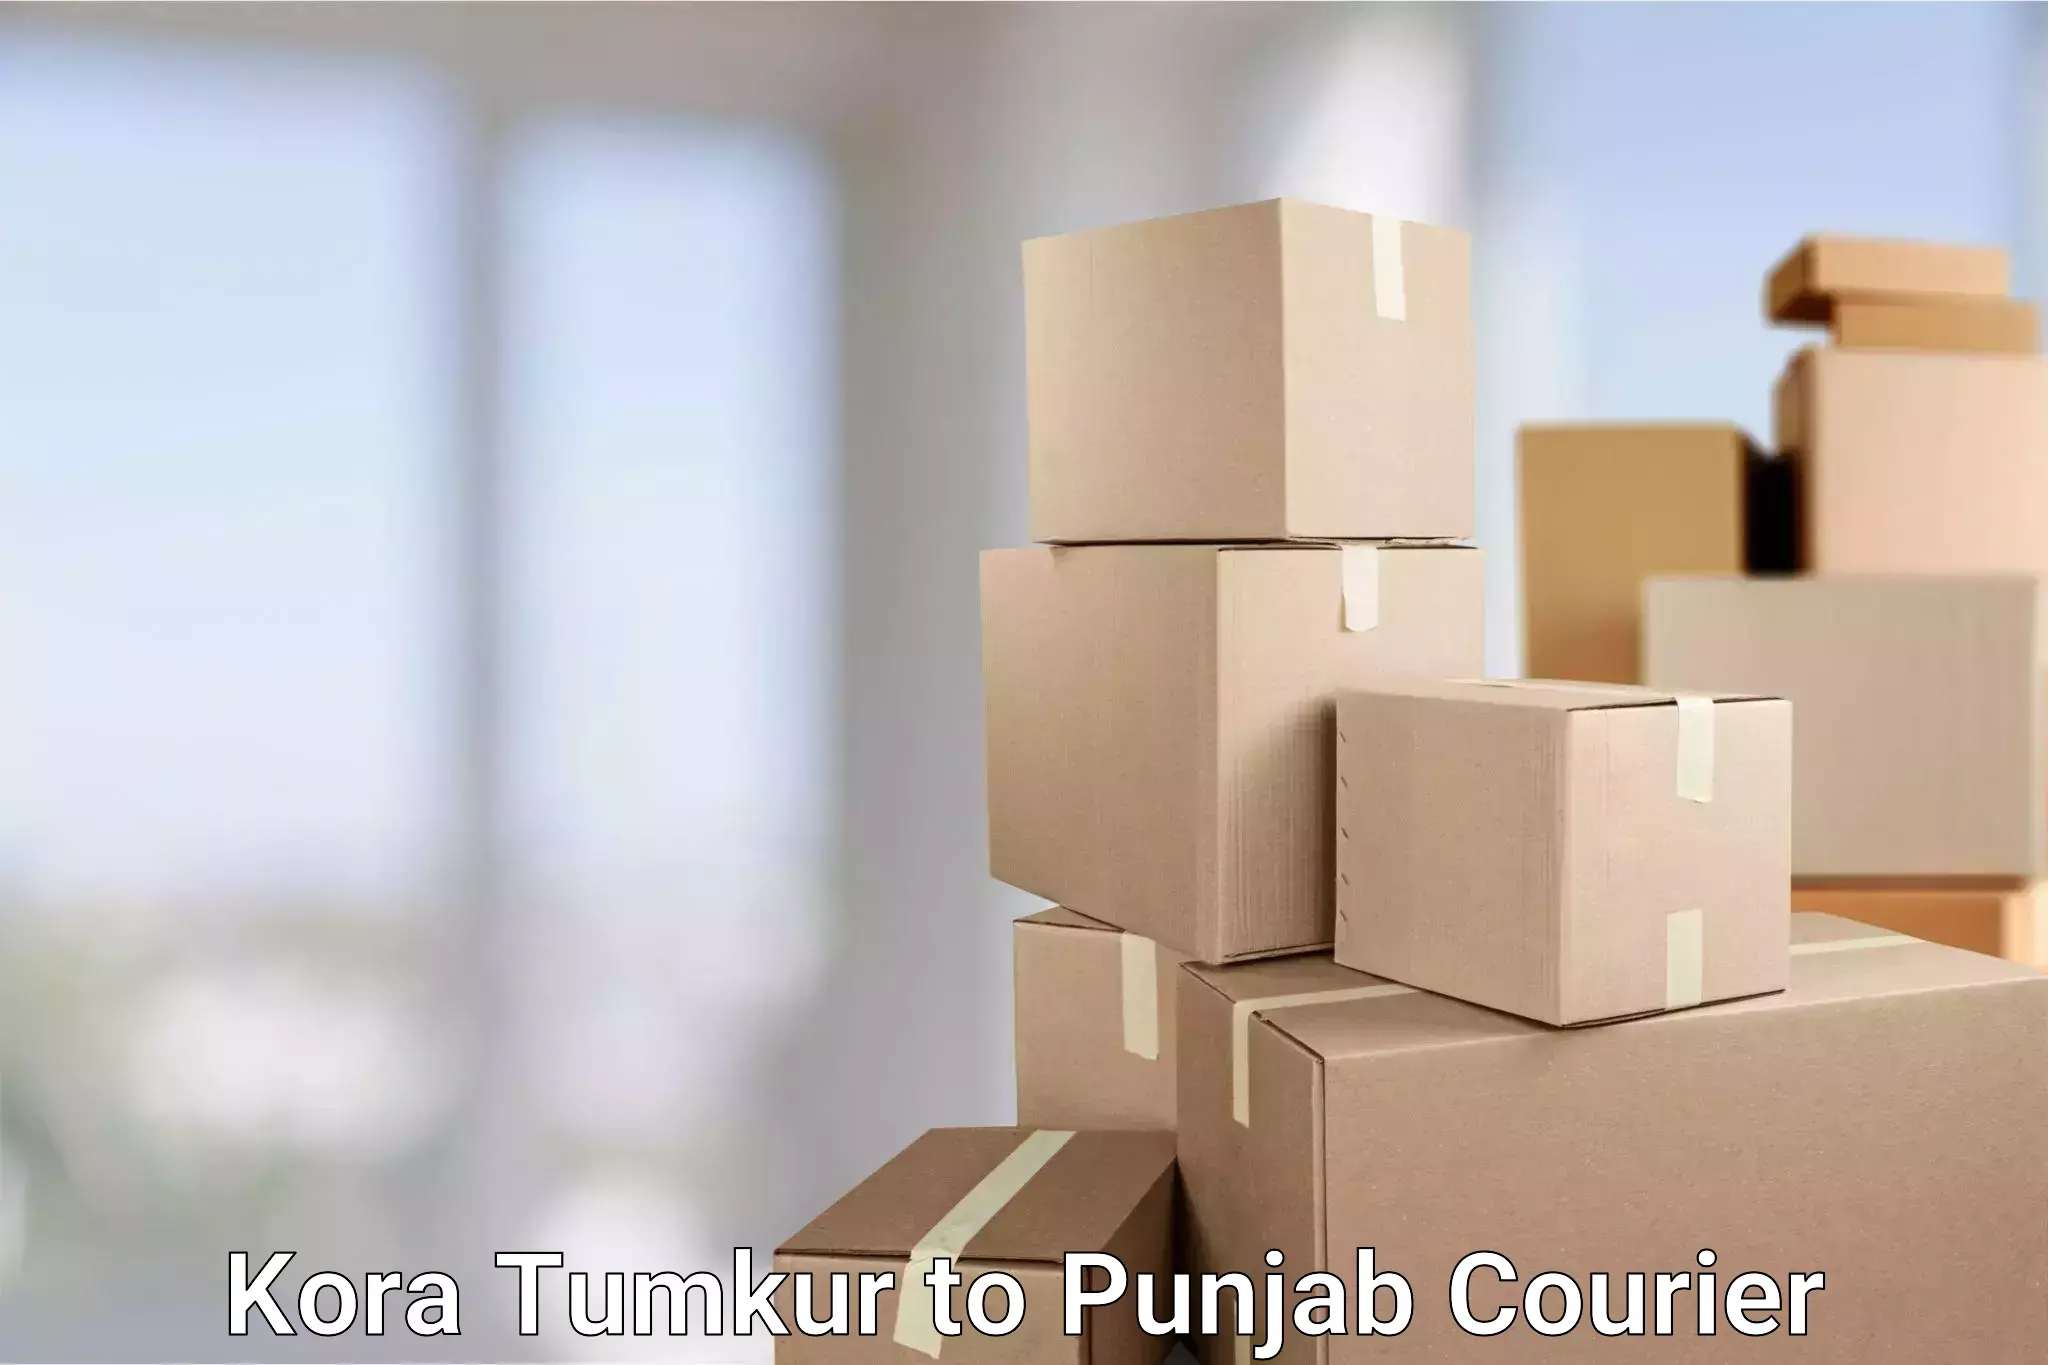 Affordable parcel service Kora Tumkur to Punjab